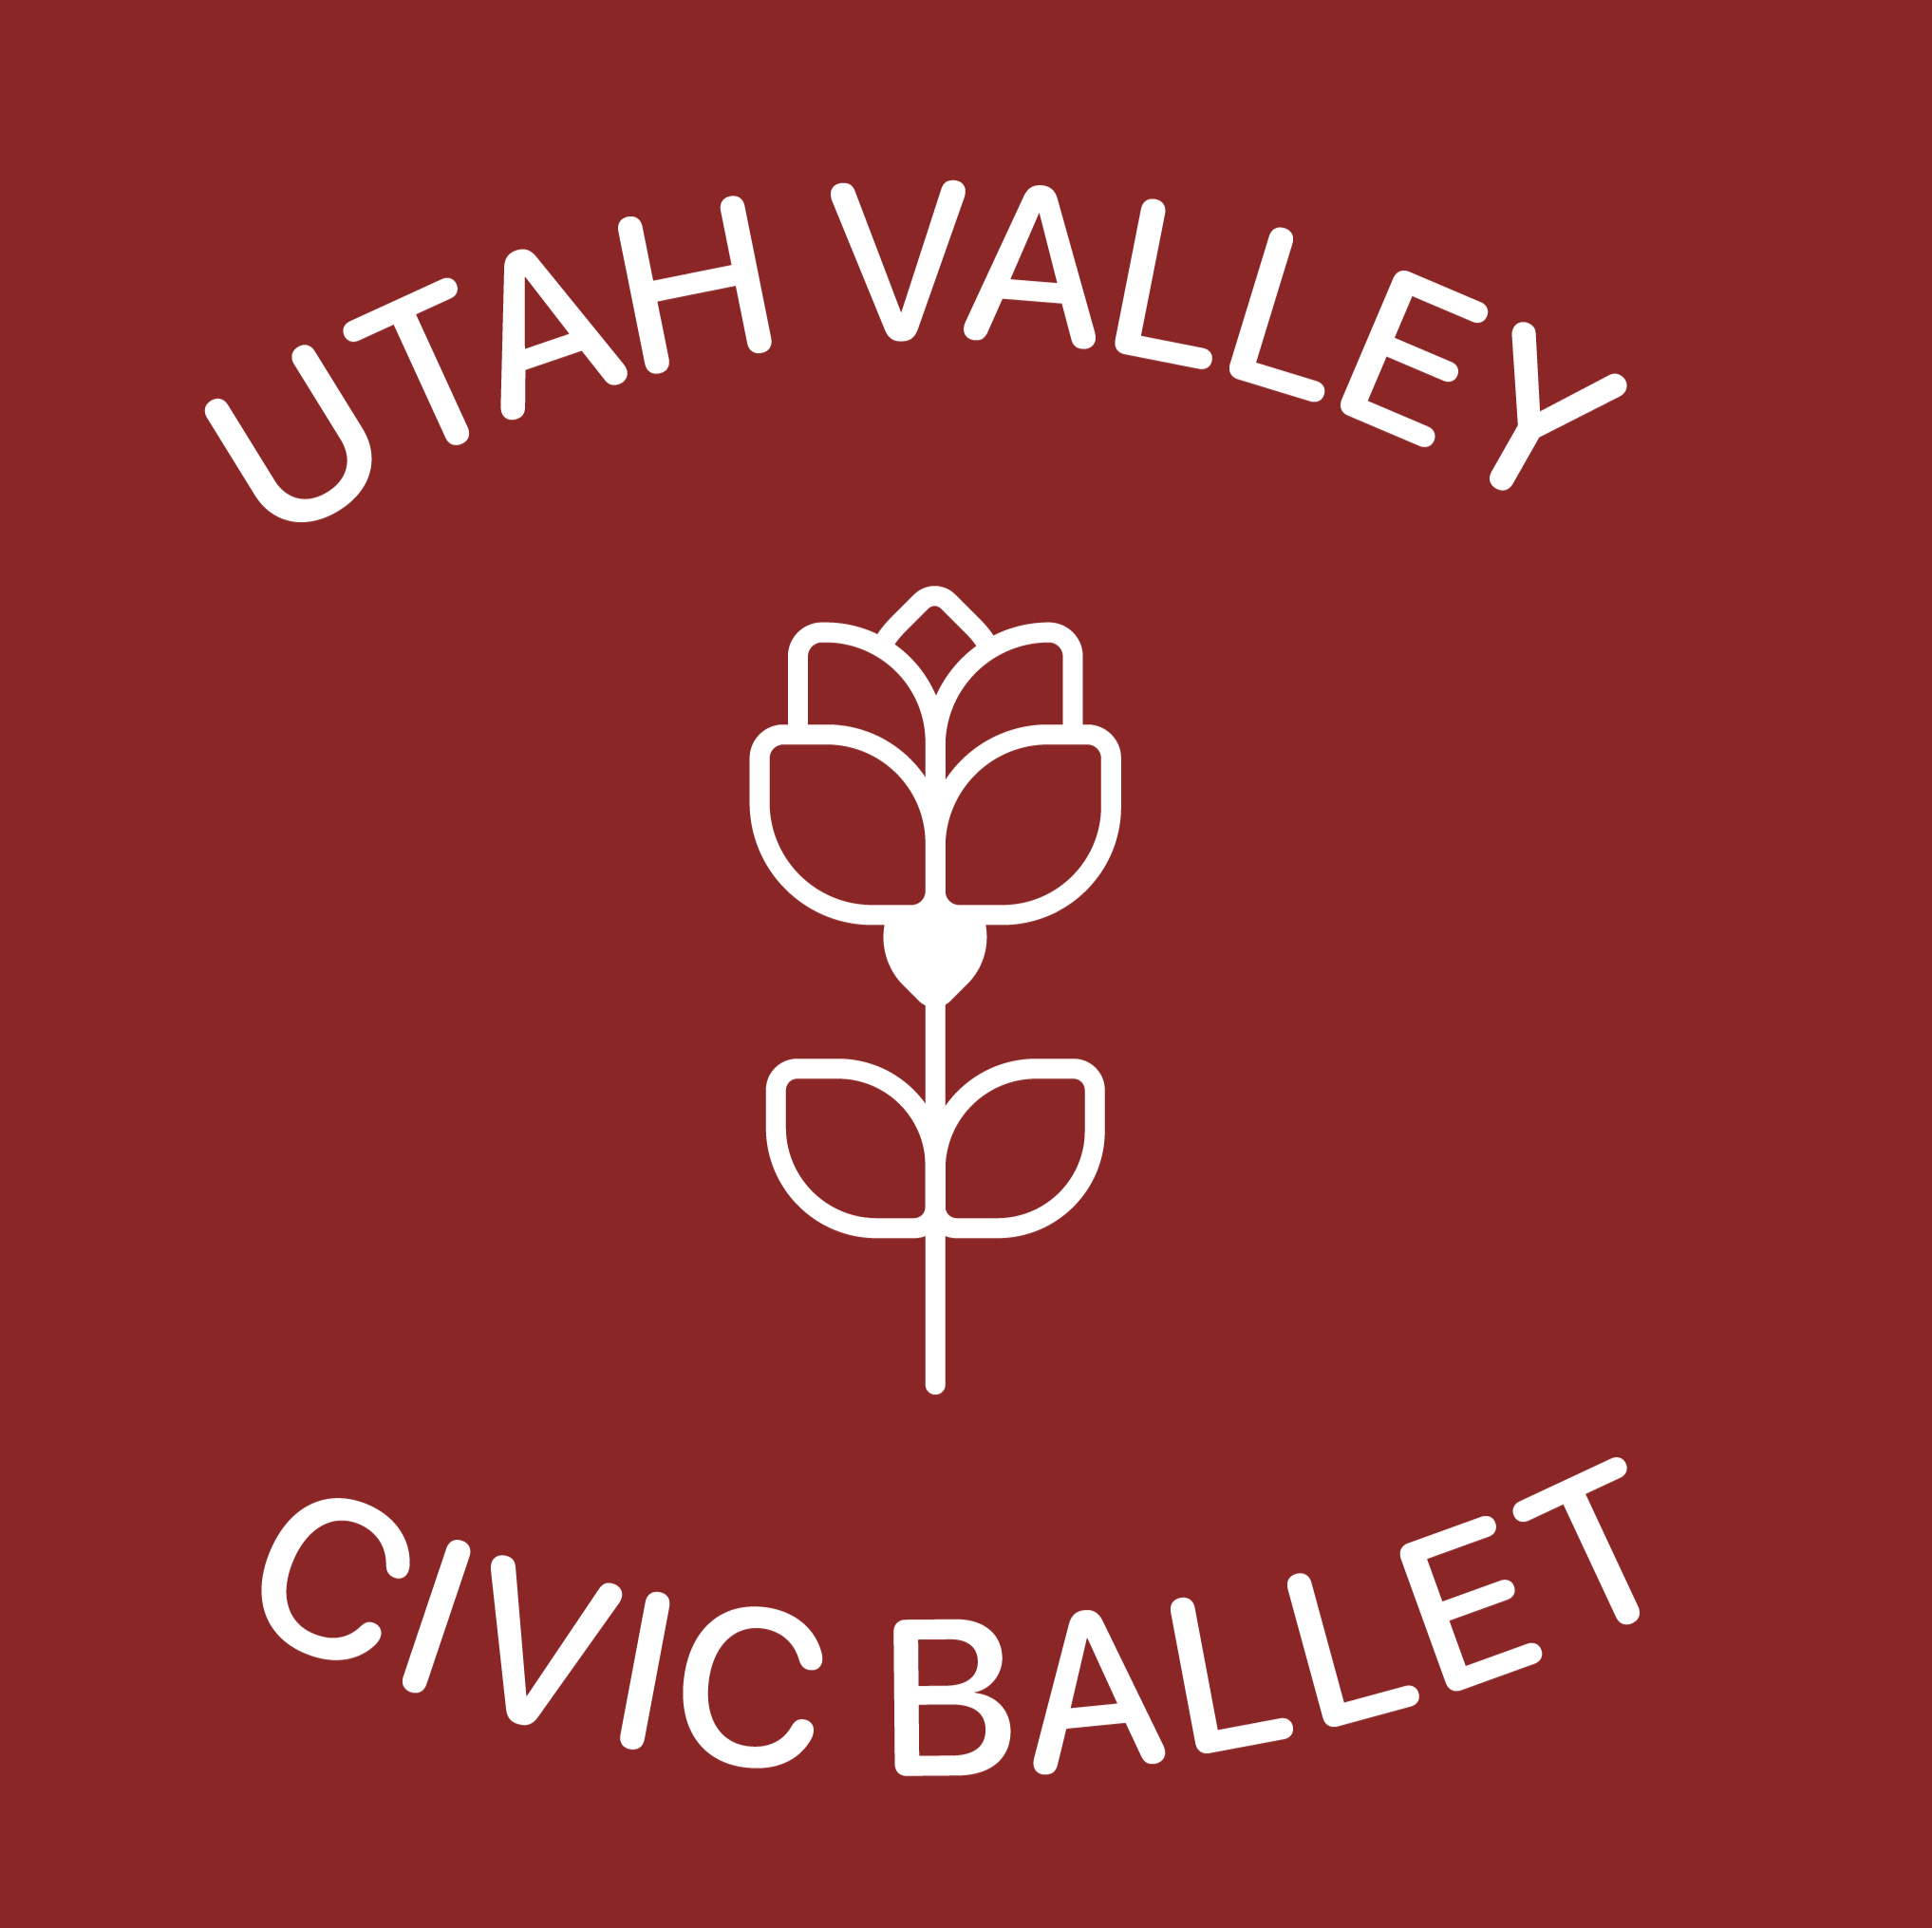 Utah Valley Civic Ballet